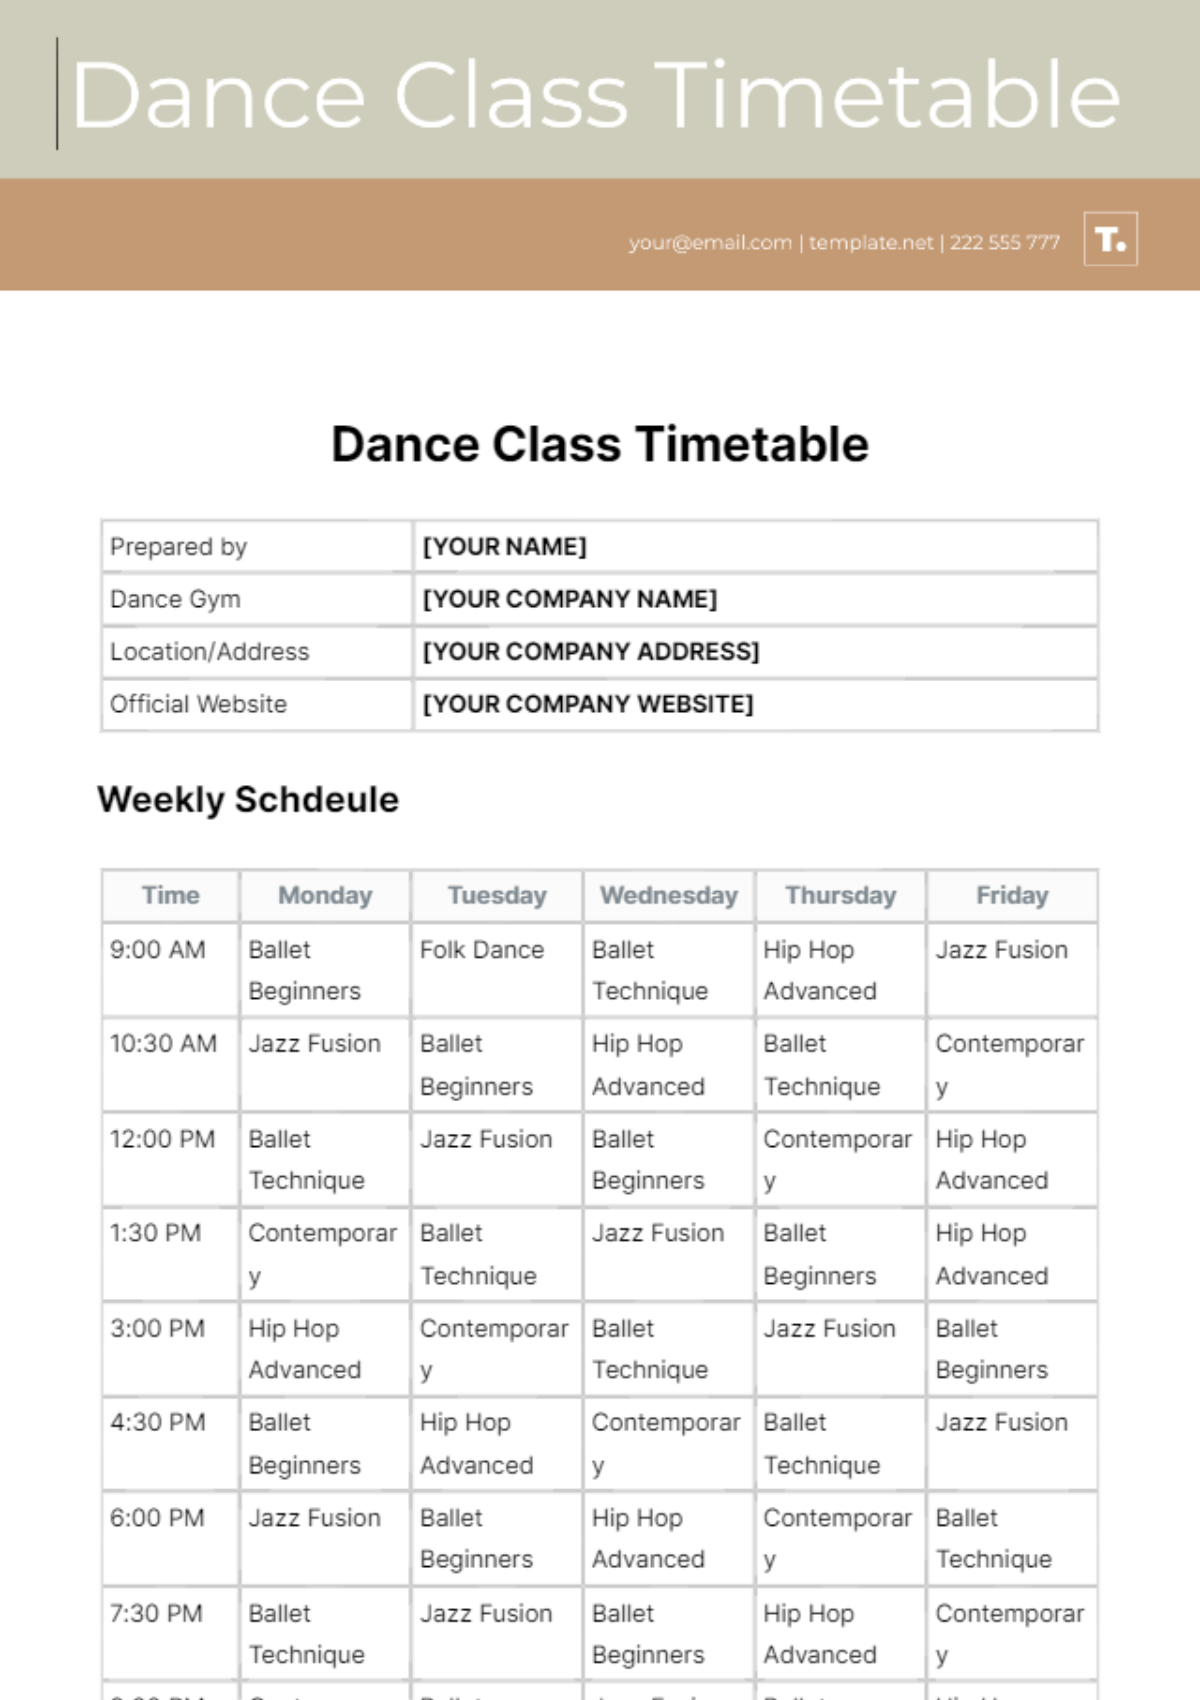 Dance Class Timetable Template